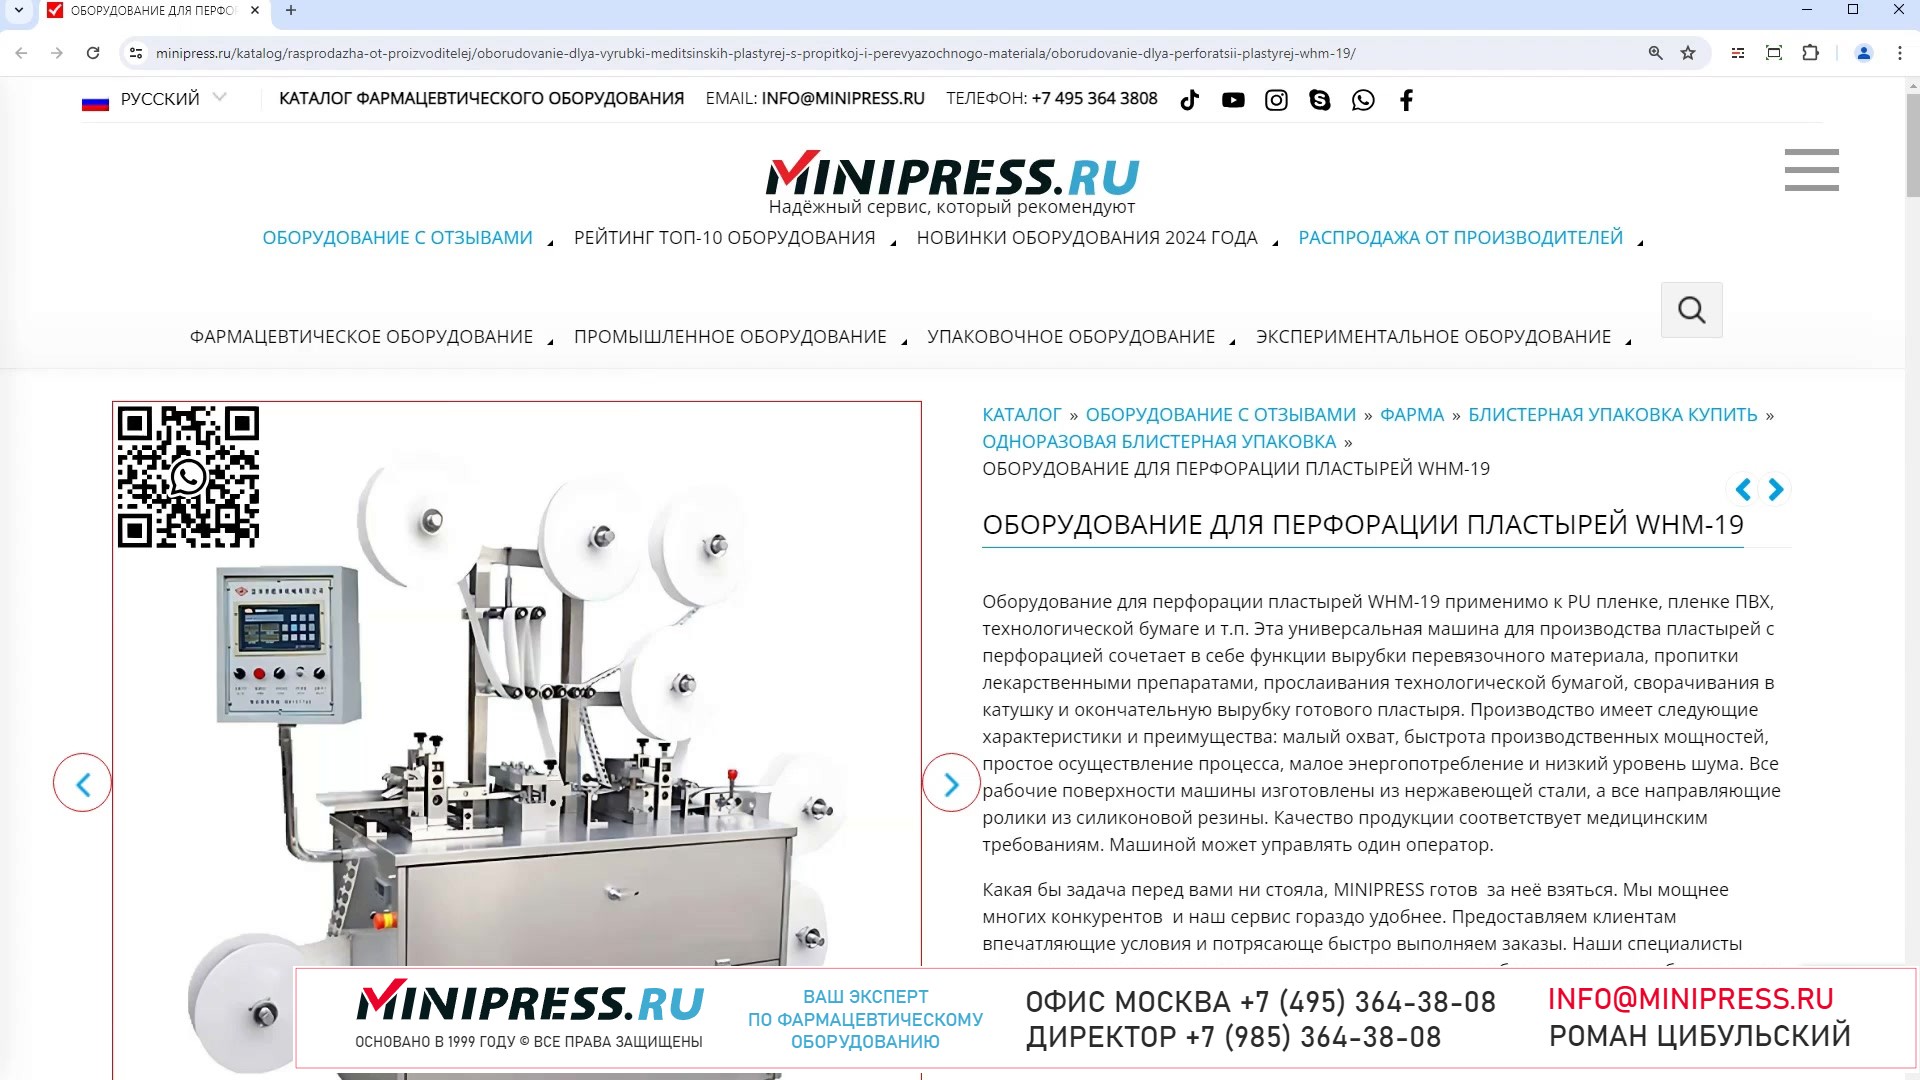 Minipress.ru Оборудование для перфорации пластырей WHM-19